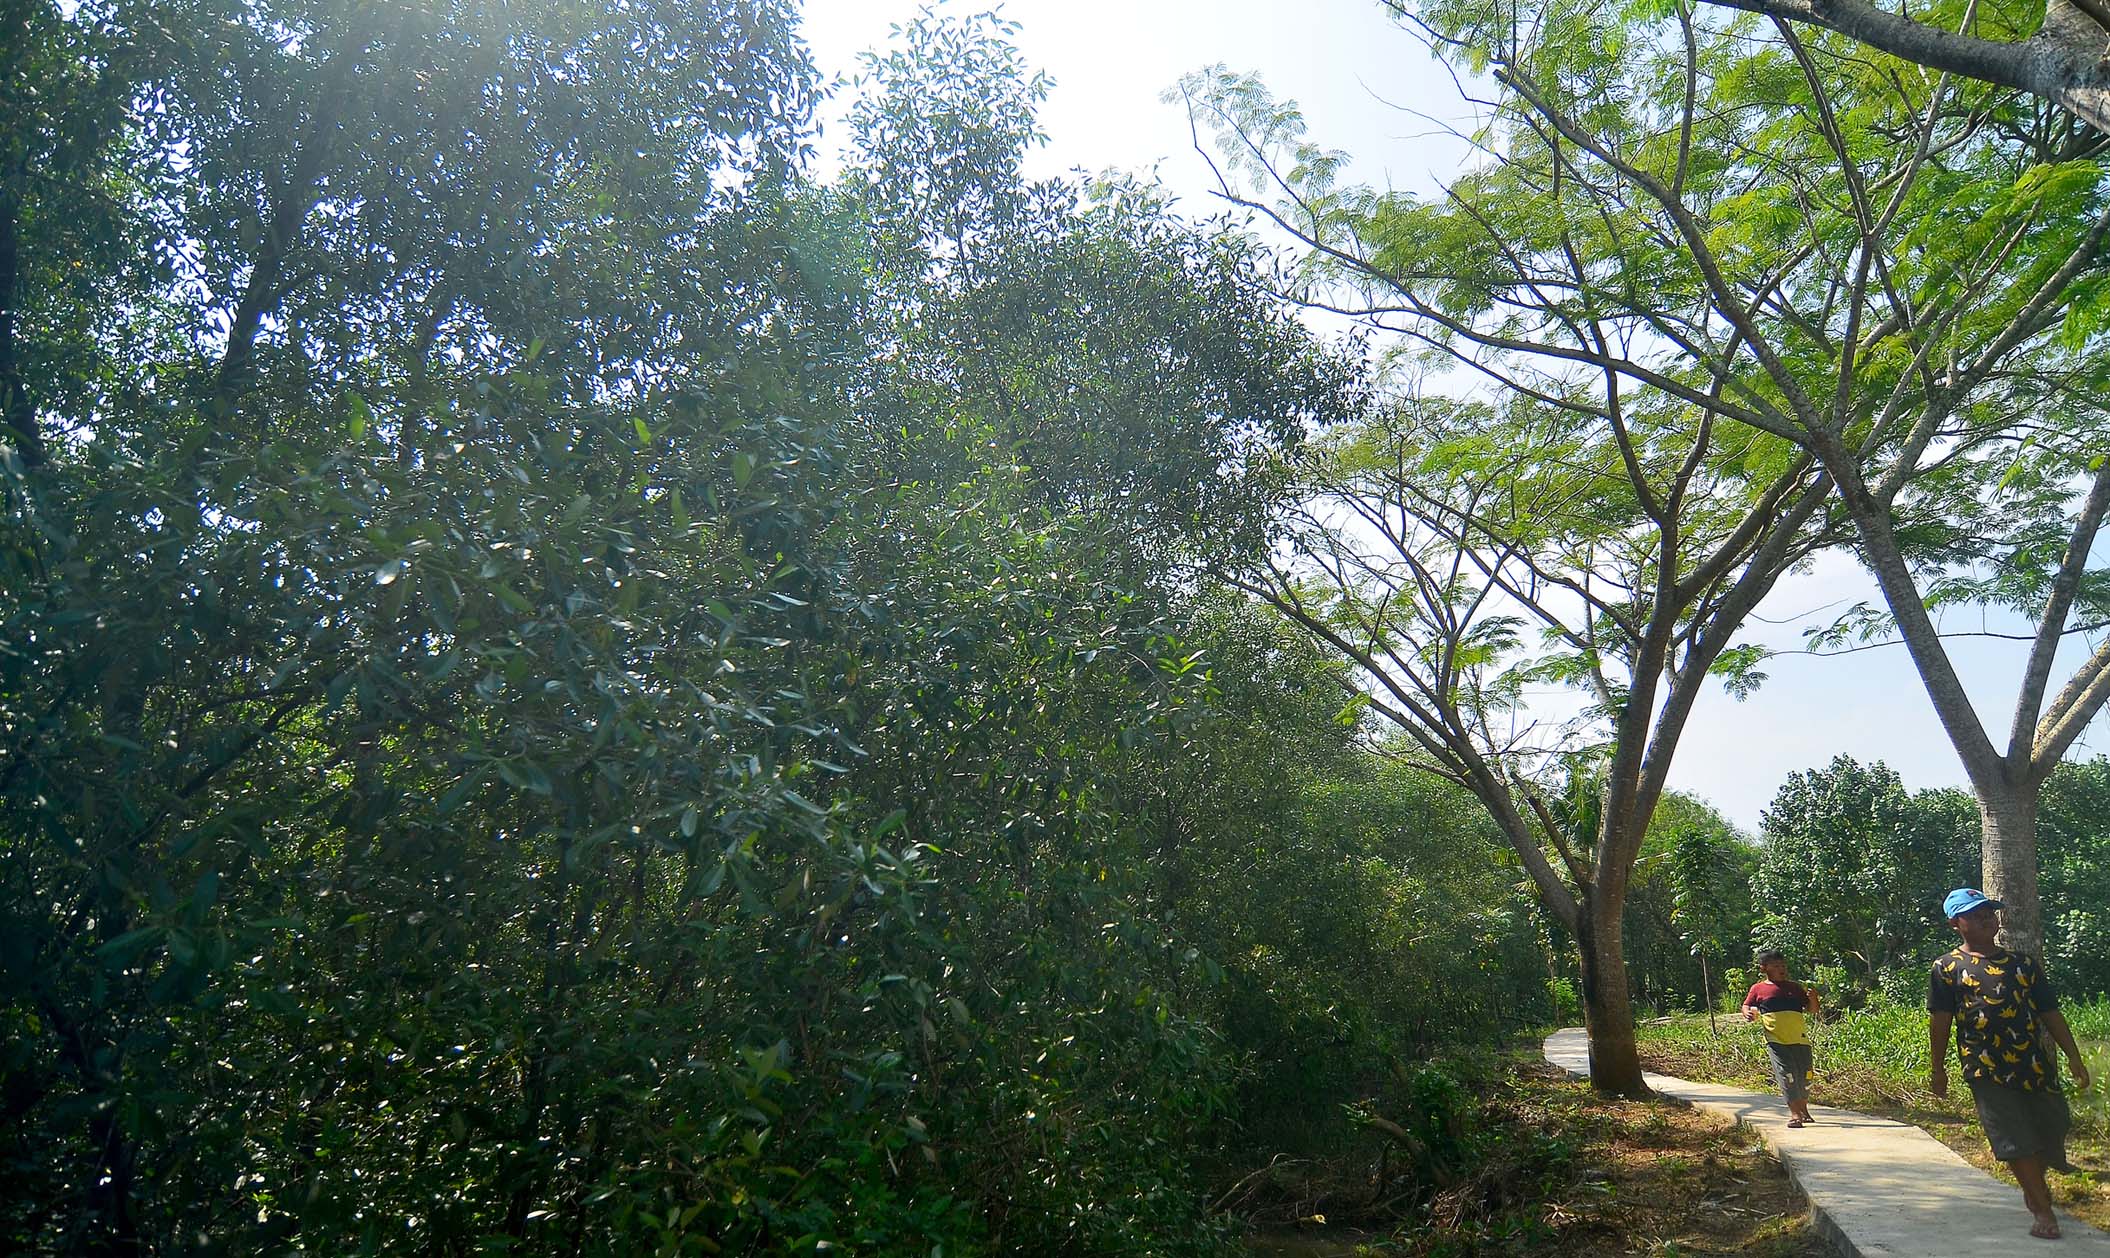 Kawasan Edo-Ekowisata Mangrove